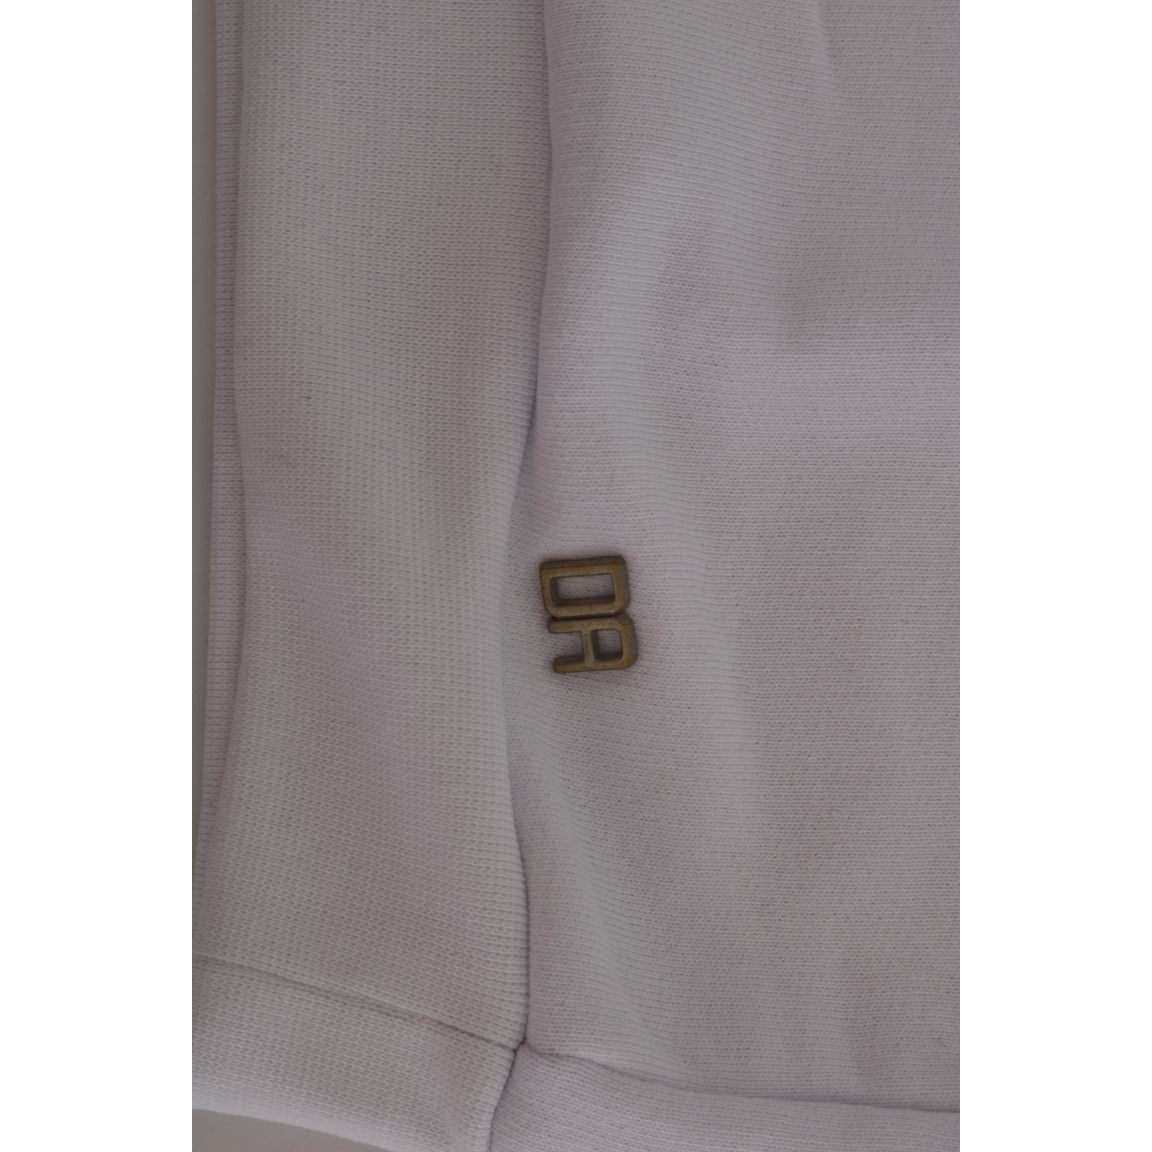 Daniele Alessandrini Elegant White Cotton Hooded Sweater white-pullover-hodded-cotton-sweater 457330-white-pullover-hodded-cotton-sweater-5-rotated.jpg